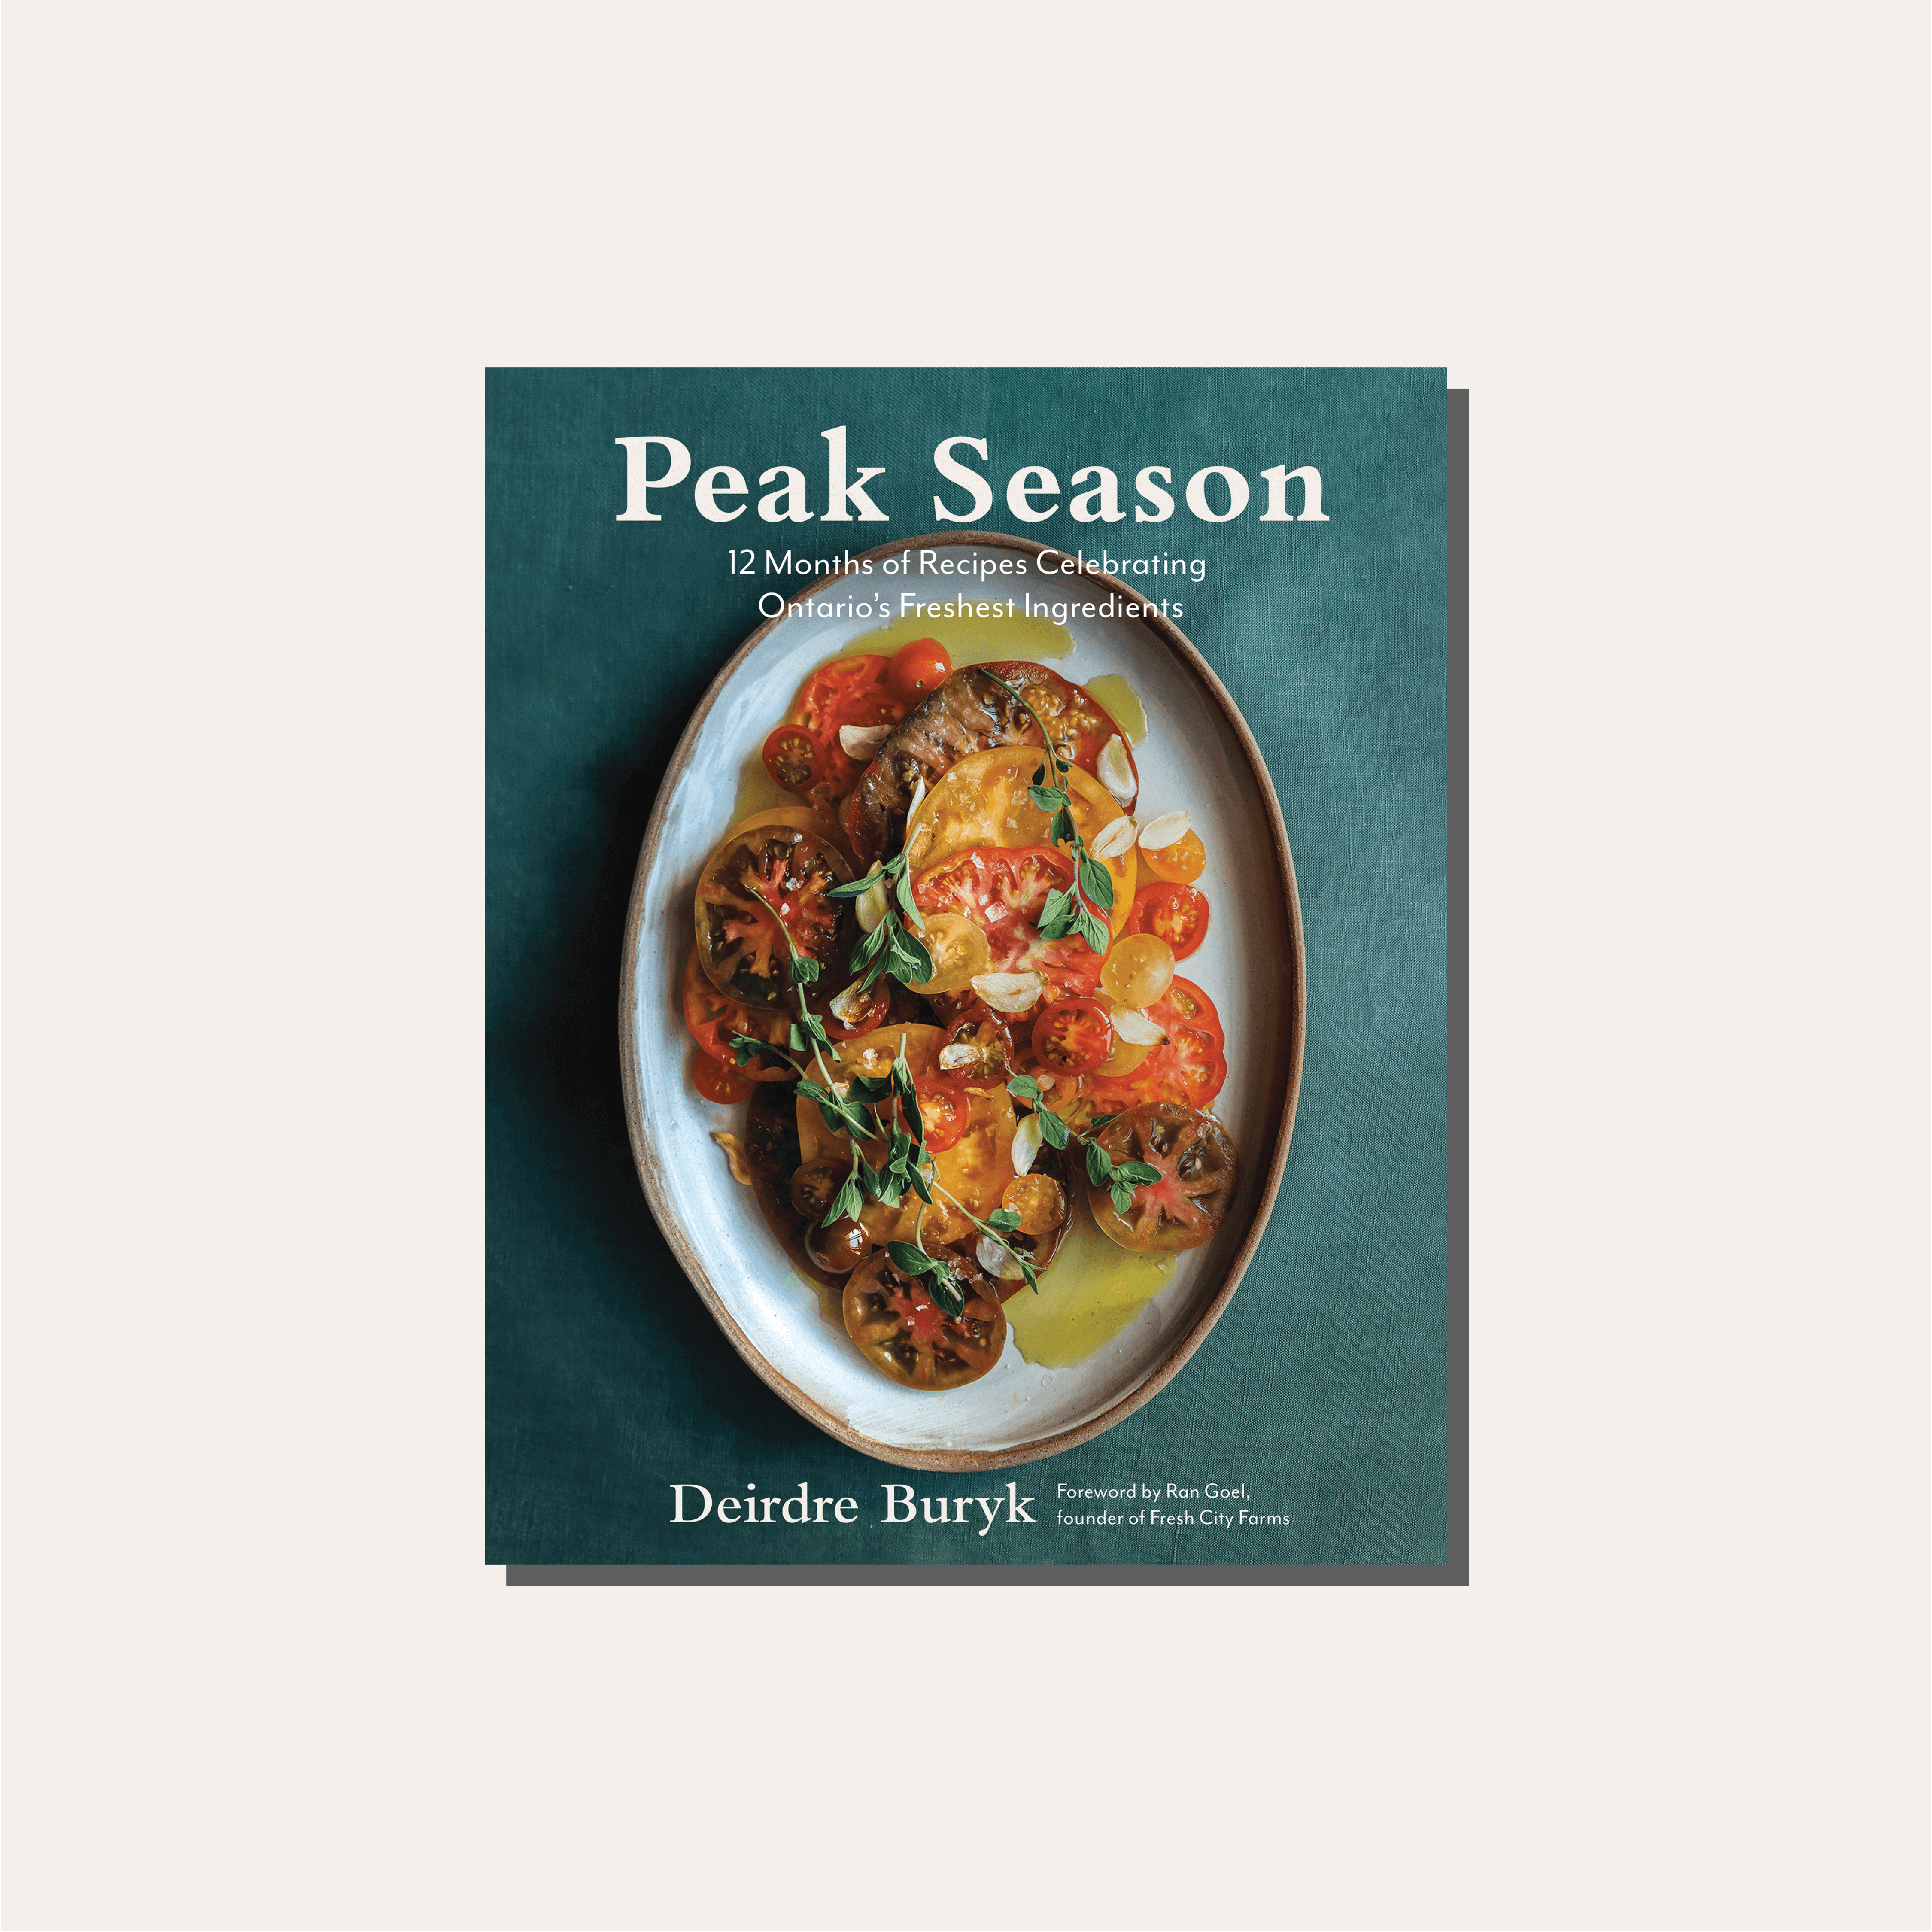 Peak Season by Deirdre Buryk cookbook cover.